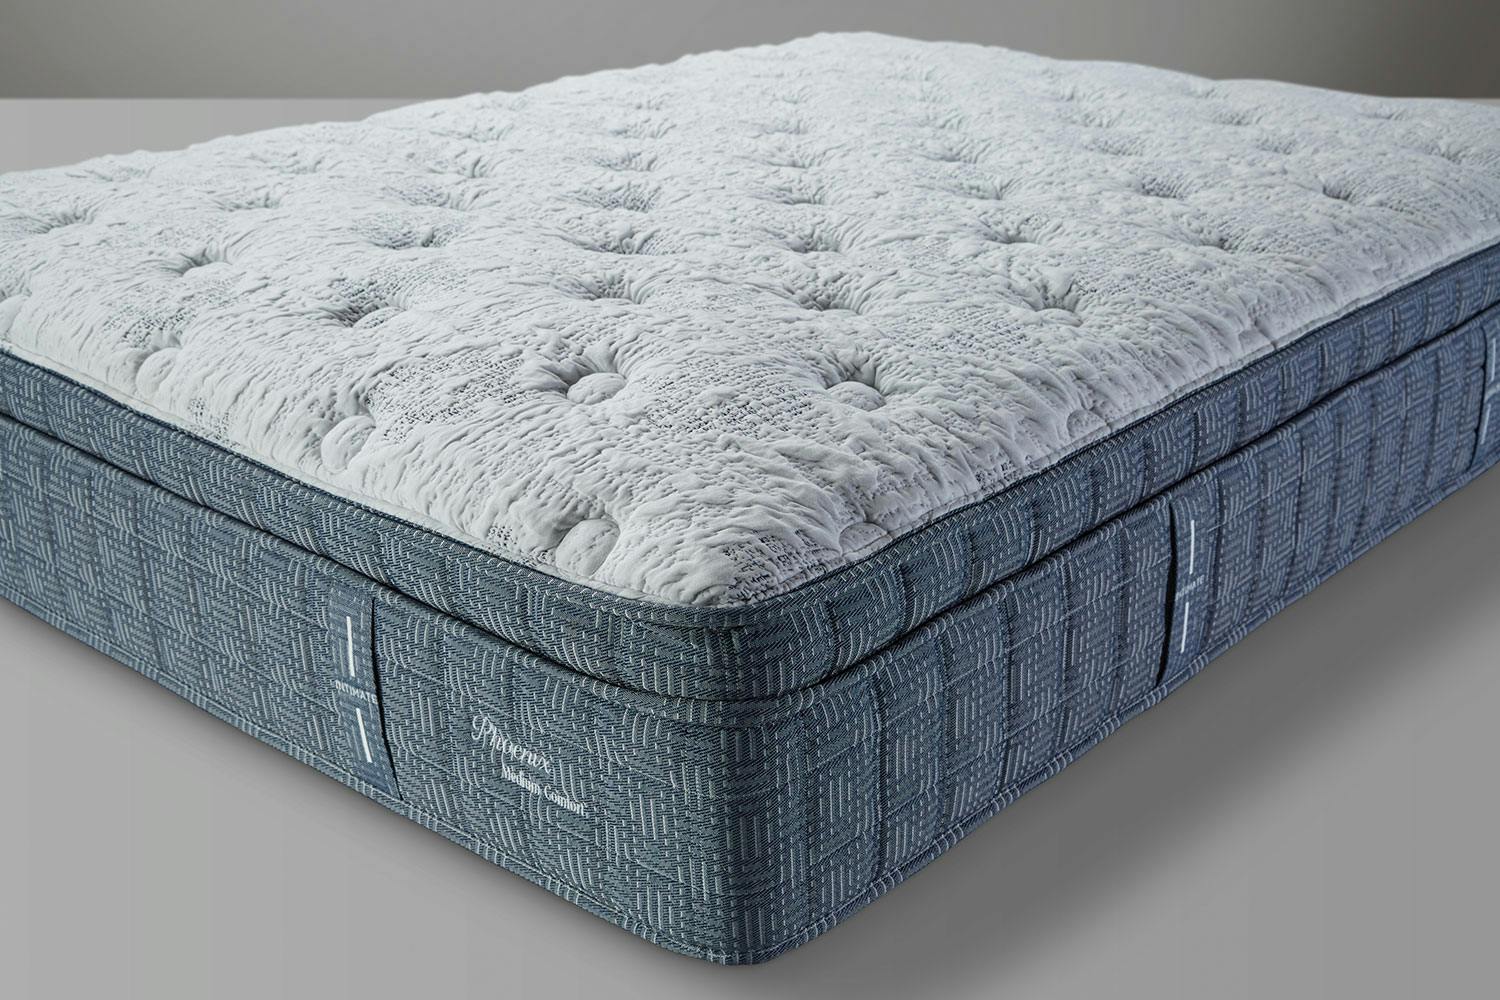 mattress base queen for sale good will